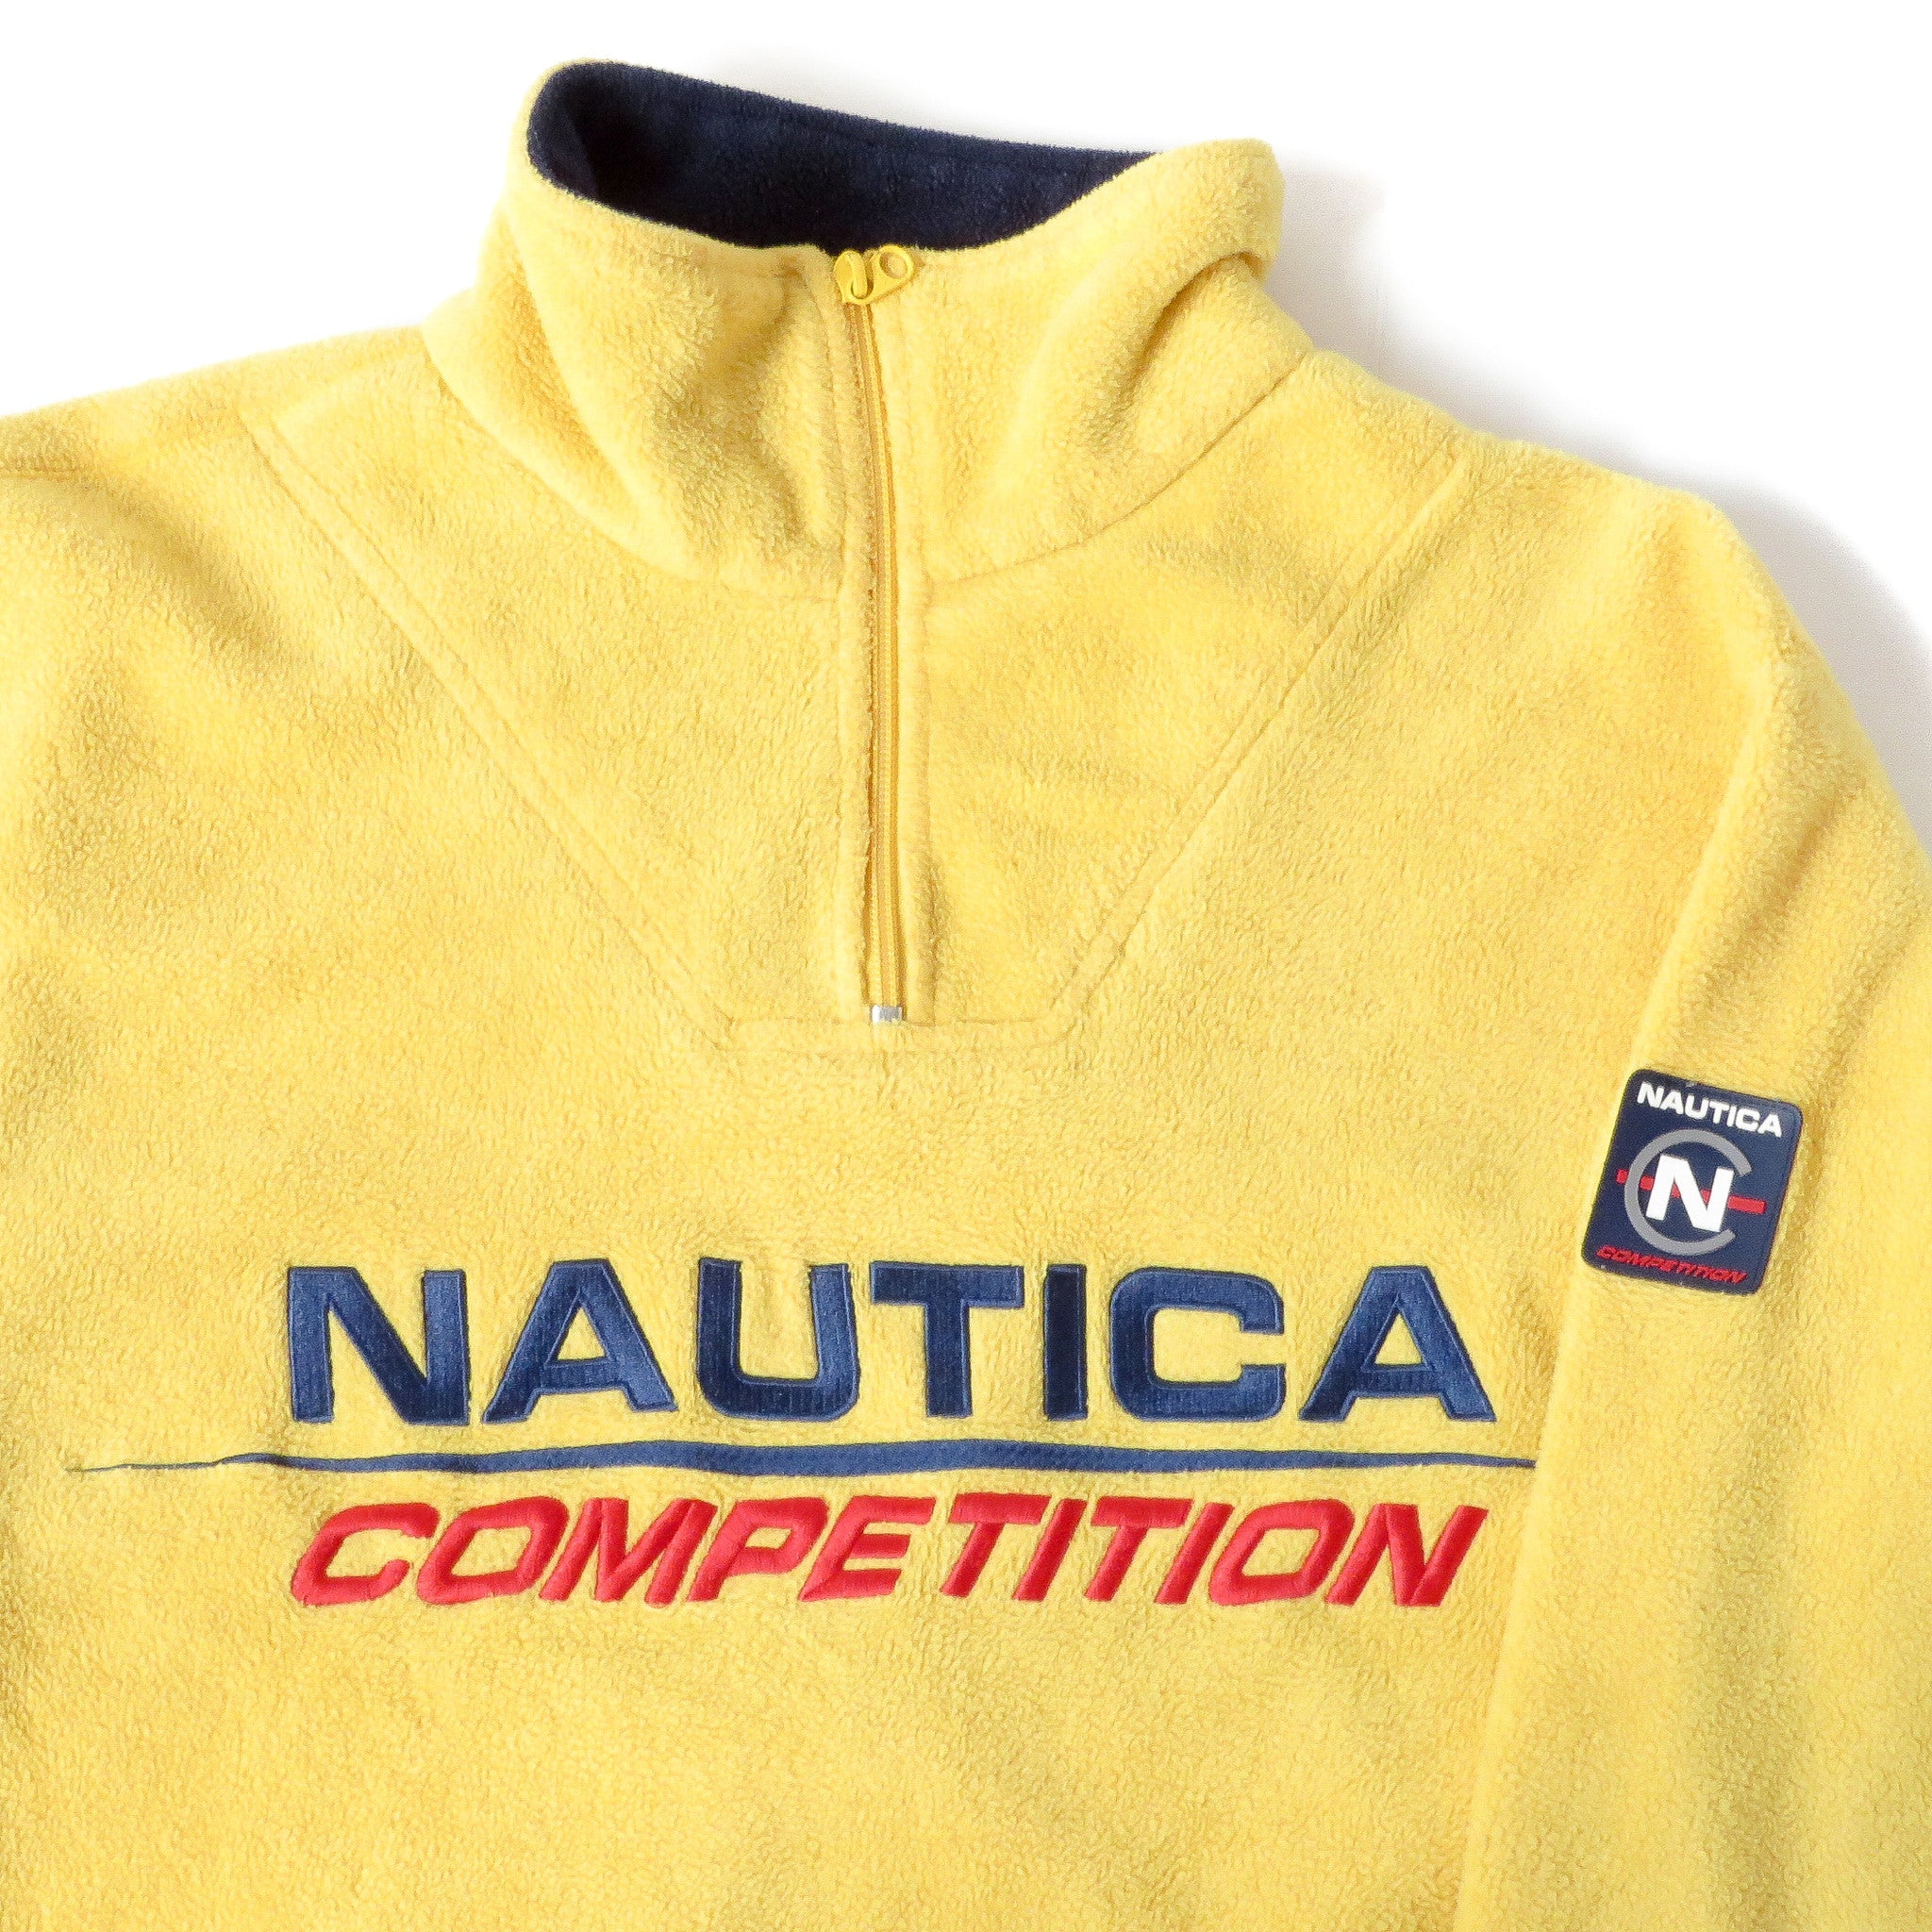 Vintage Nautica Competition Fleece Pullover Jacket Sz S